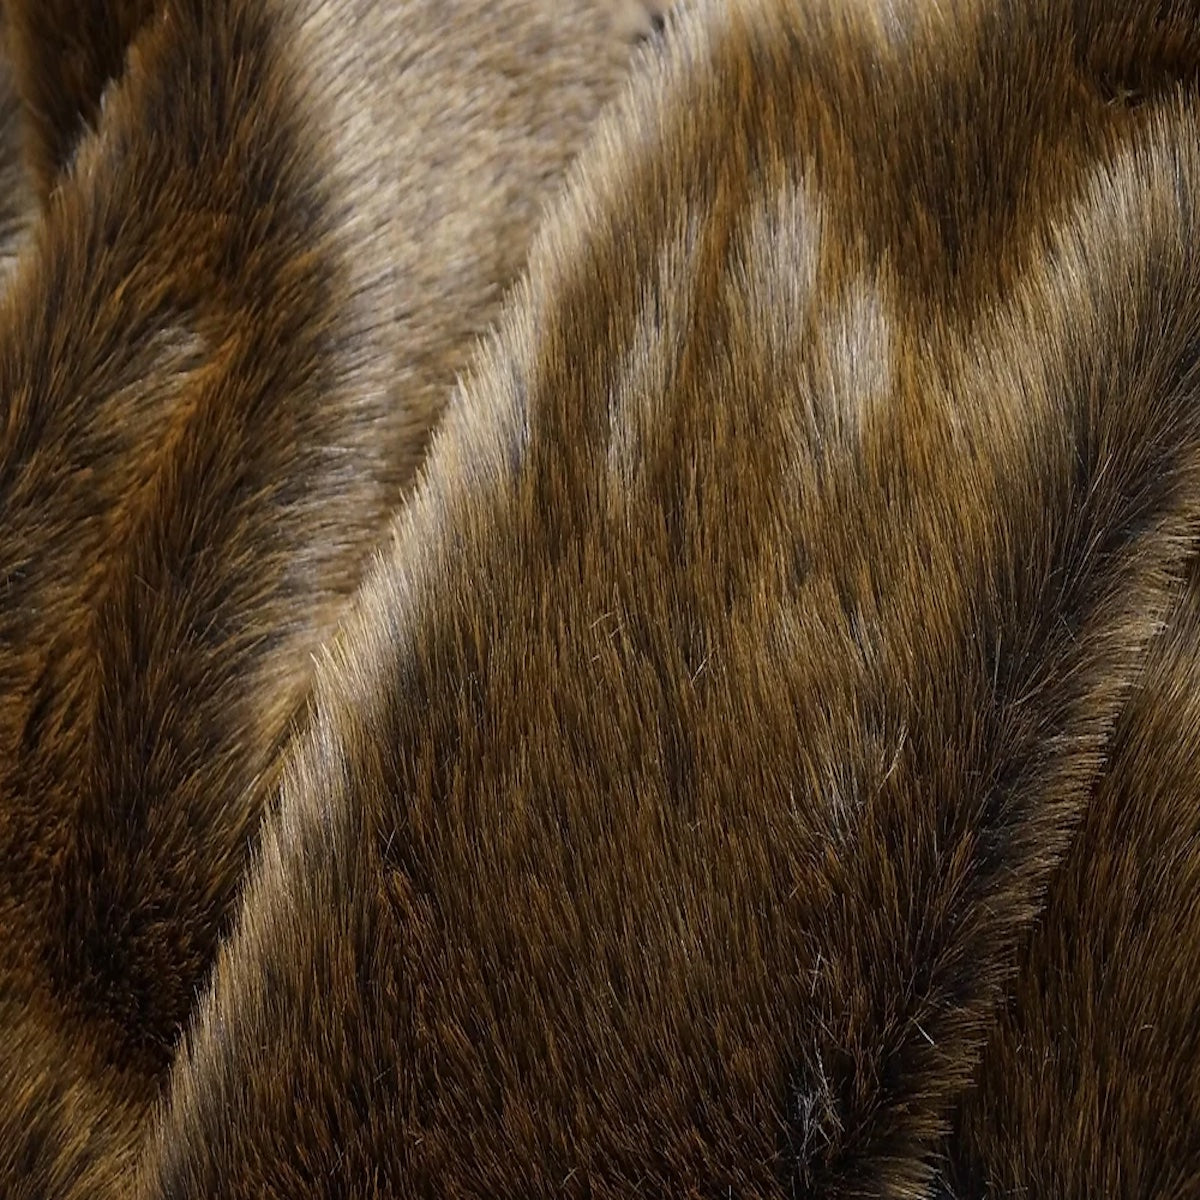 Tela marrón de piel sintética de pelo corto con osos castores